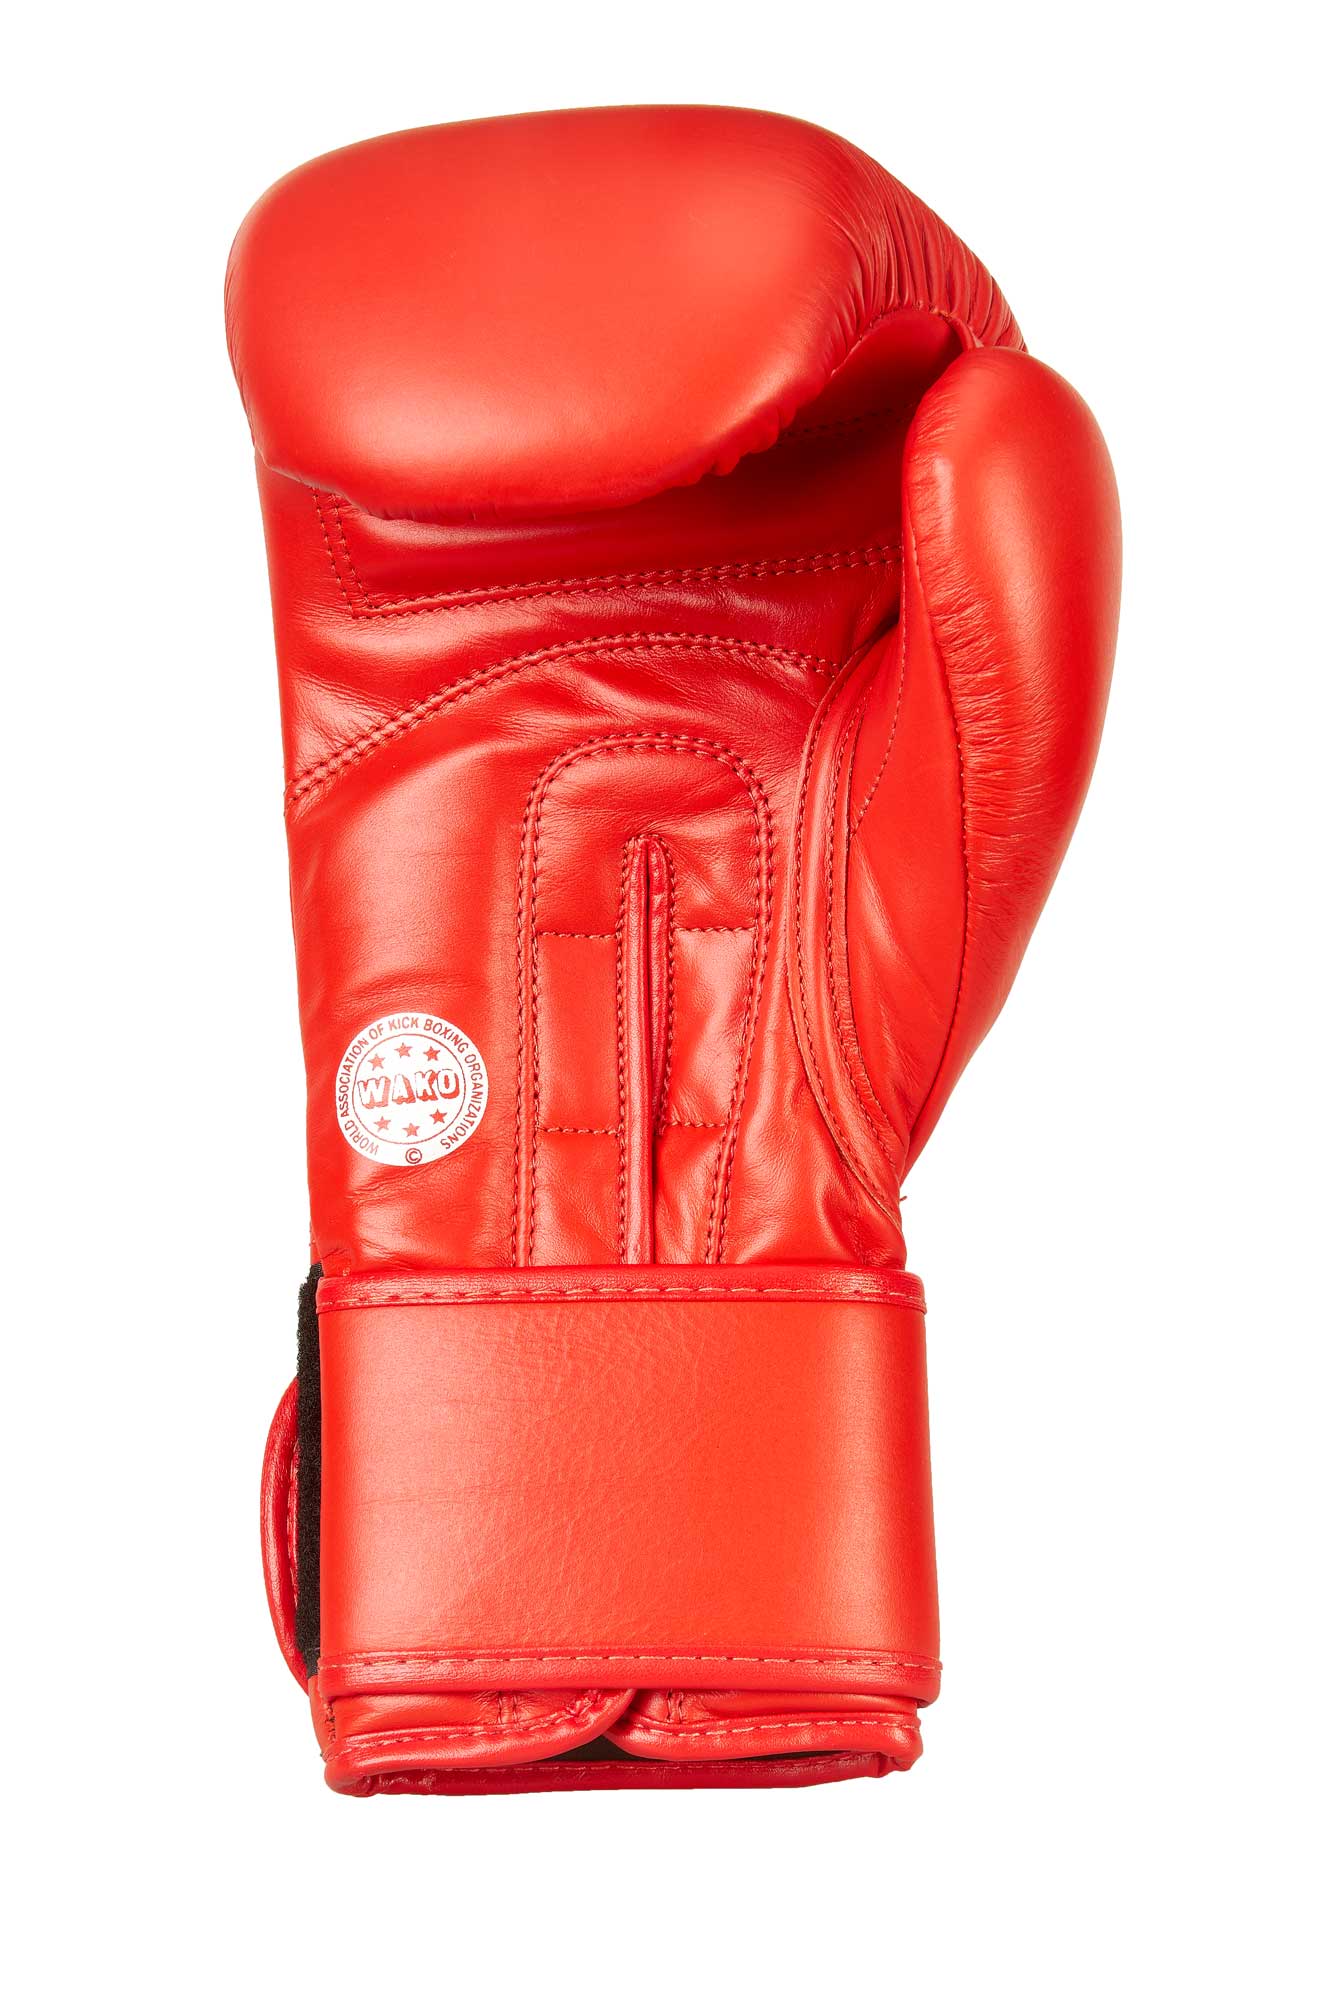 adidas WAKO amateur boxing glove ADIWAKOG1, 10 oz red